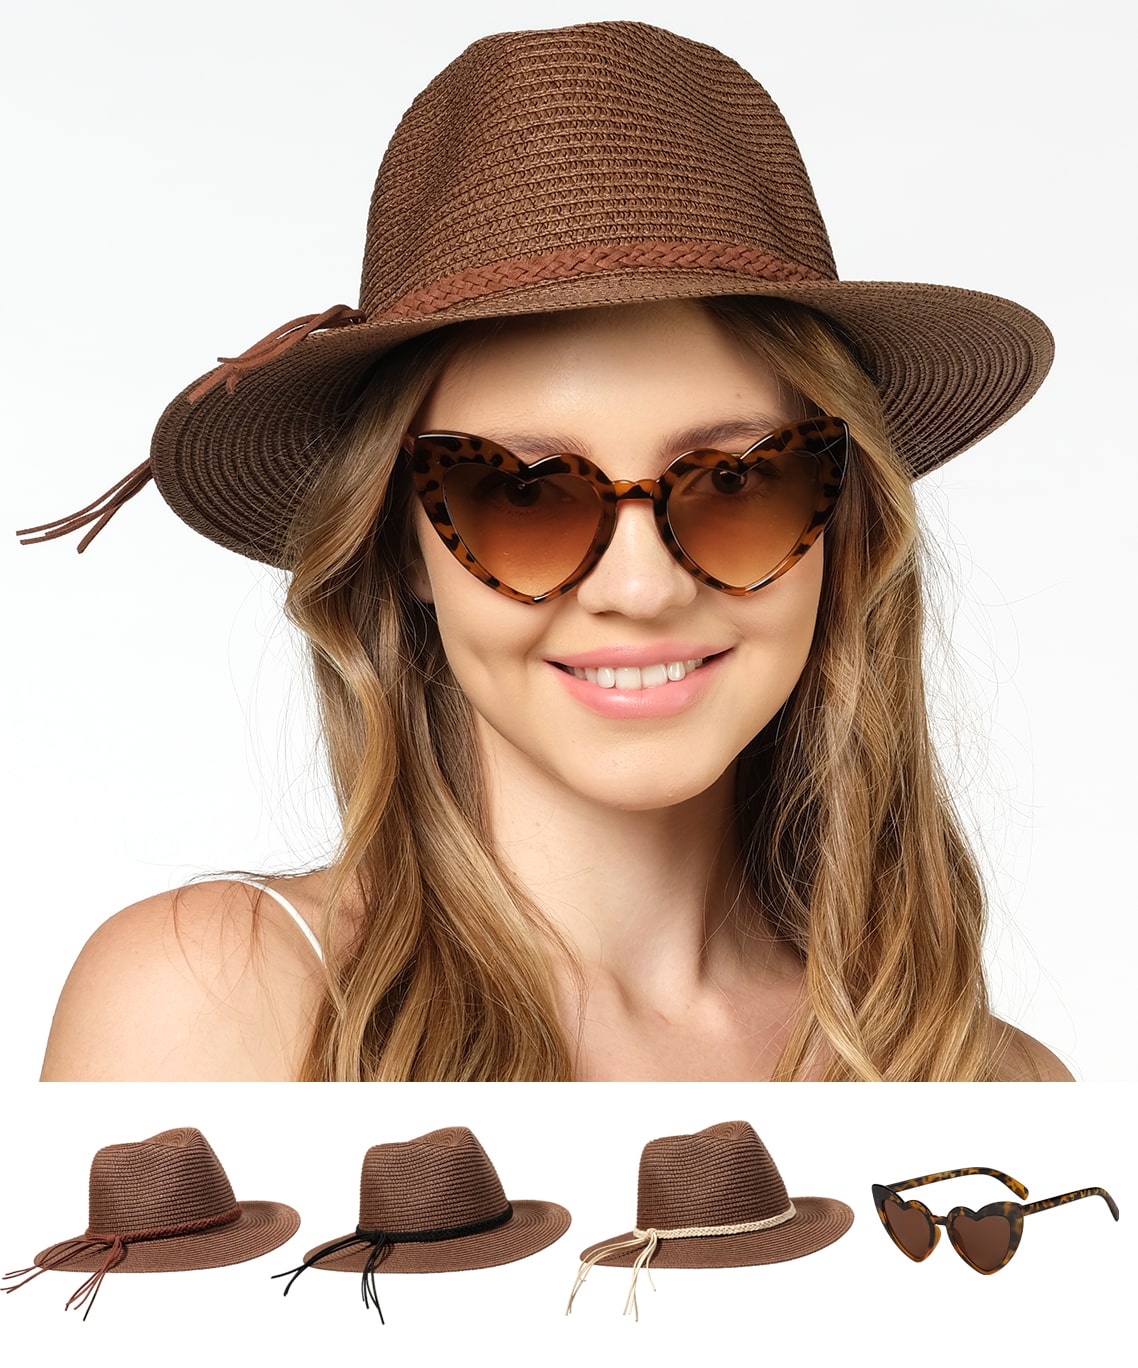 Brown Panama Straw Beach Hats for Women - Fedora Sun Hat - Funcredible